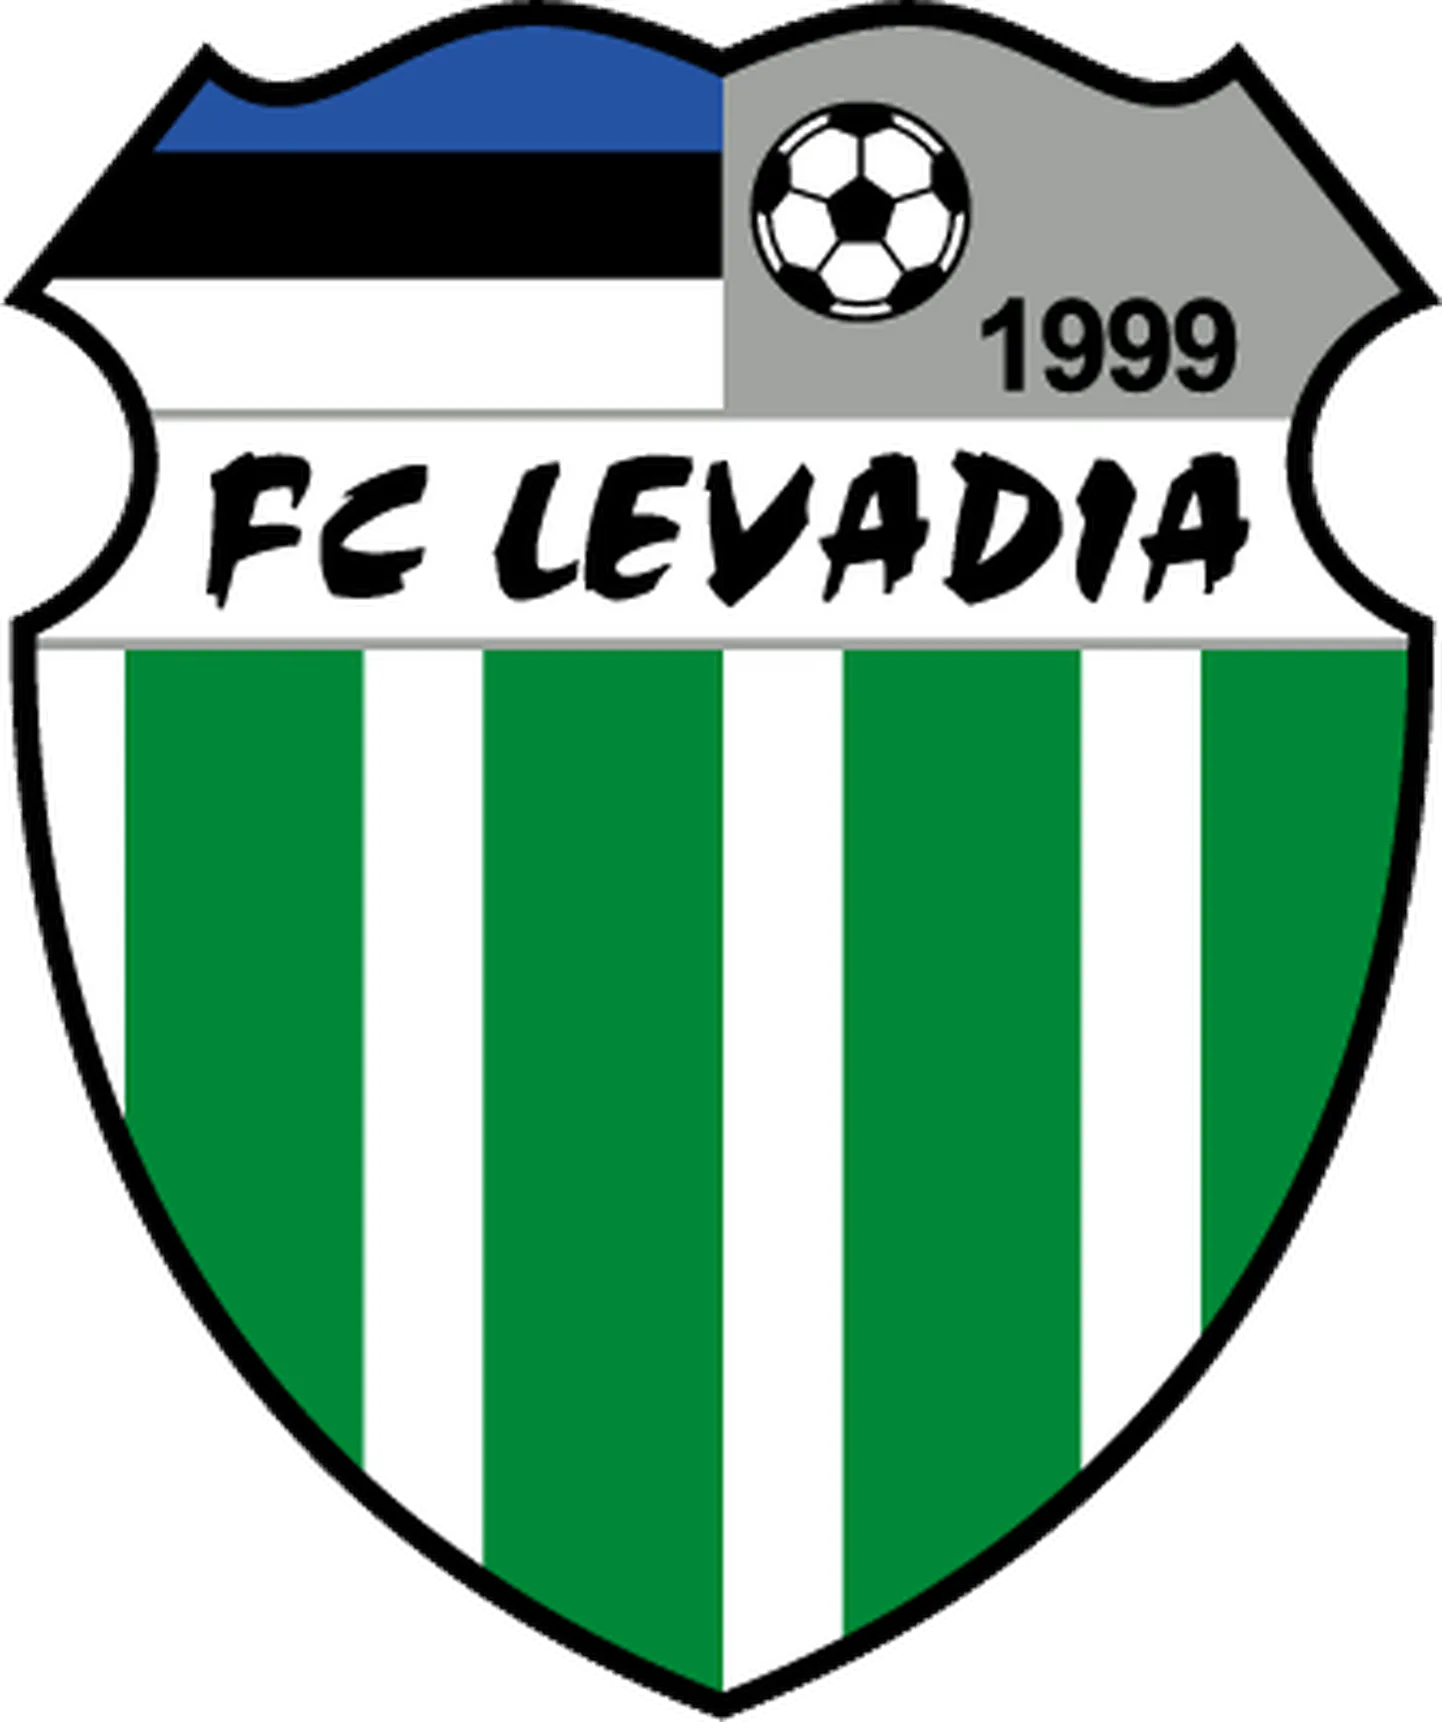 Tallinna Levadia logo.